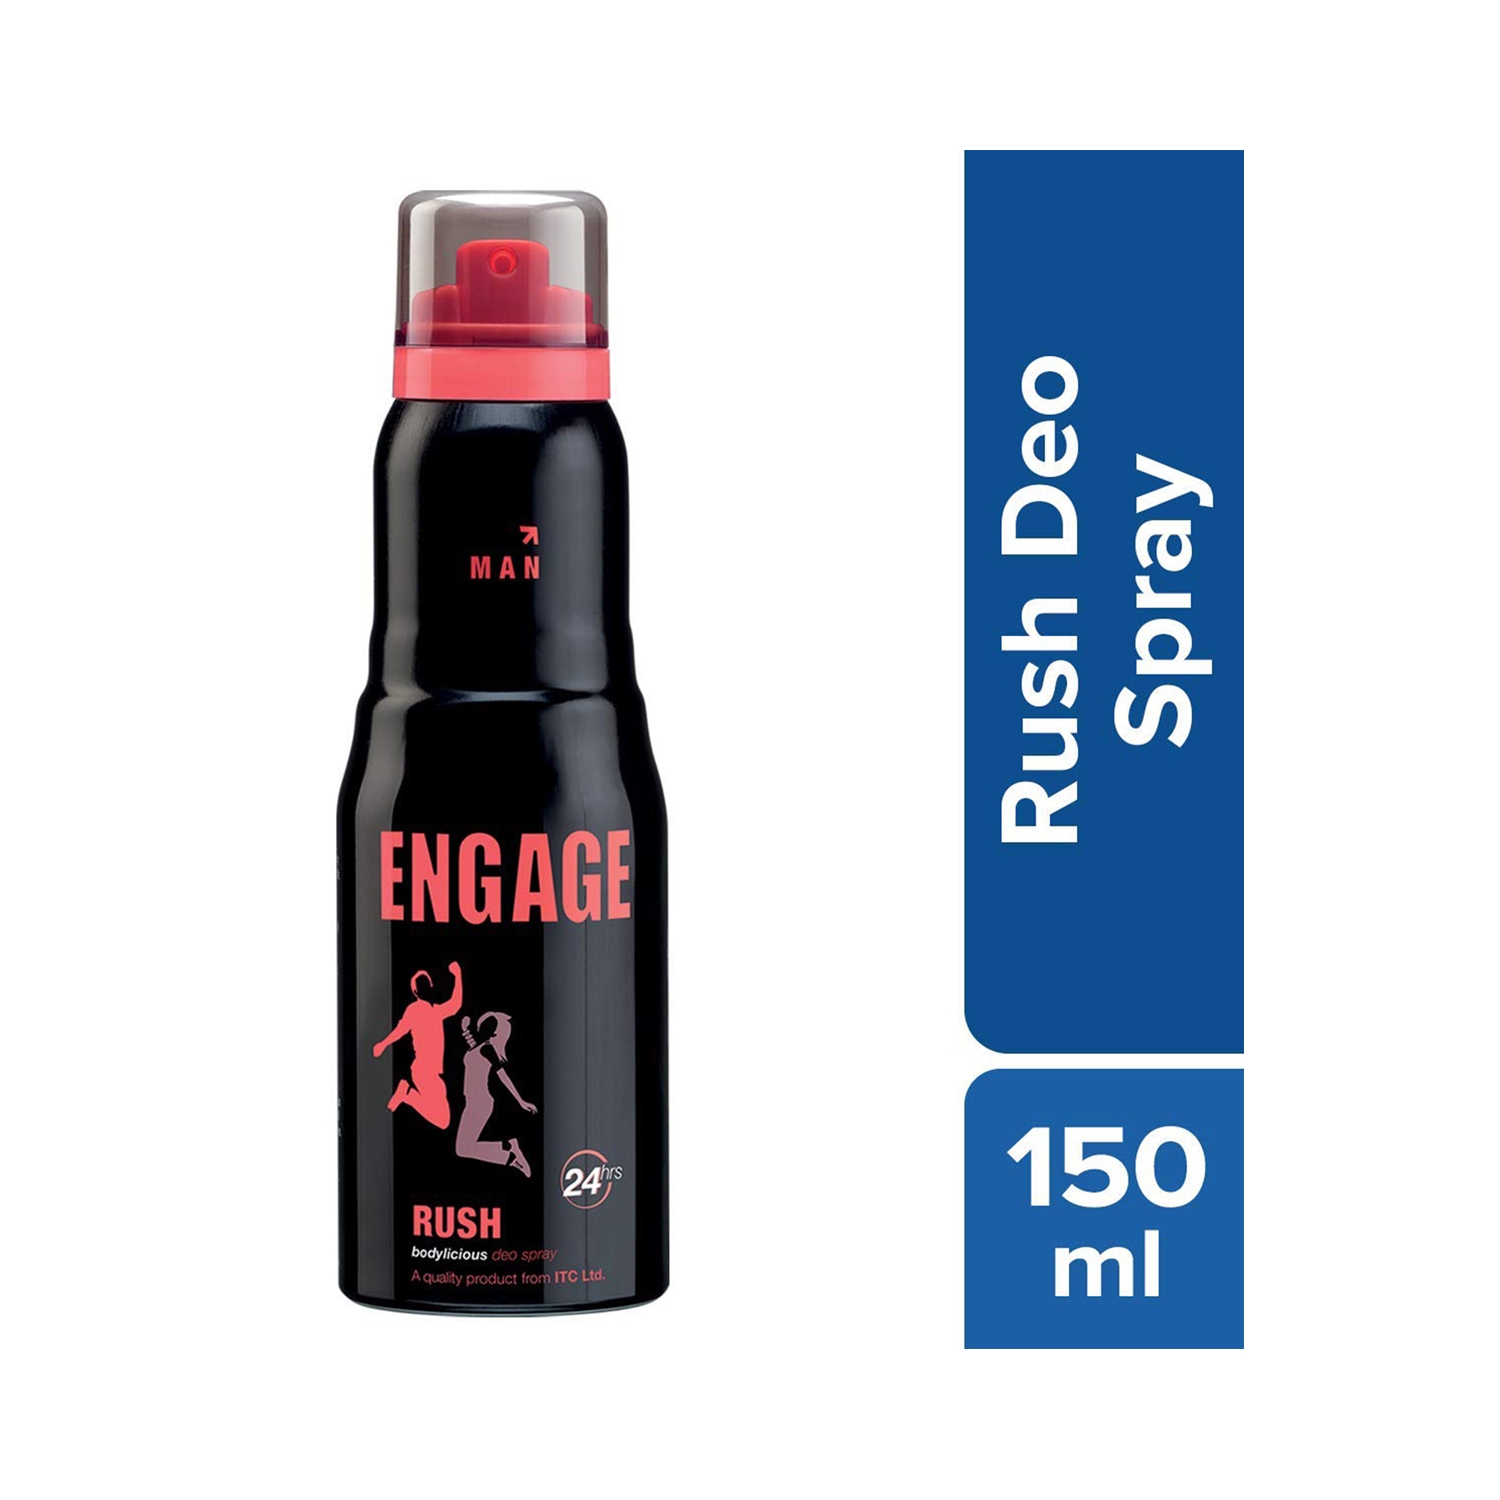 Engage | Engage Rush Deodorant Spray For Man (150ml)